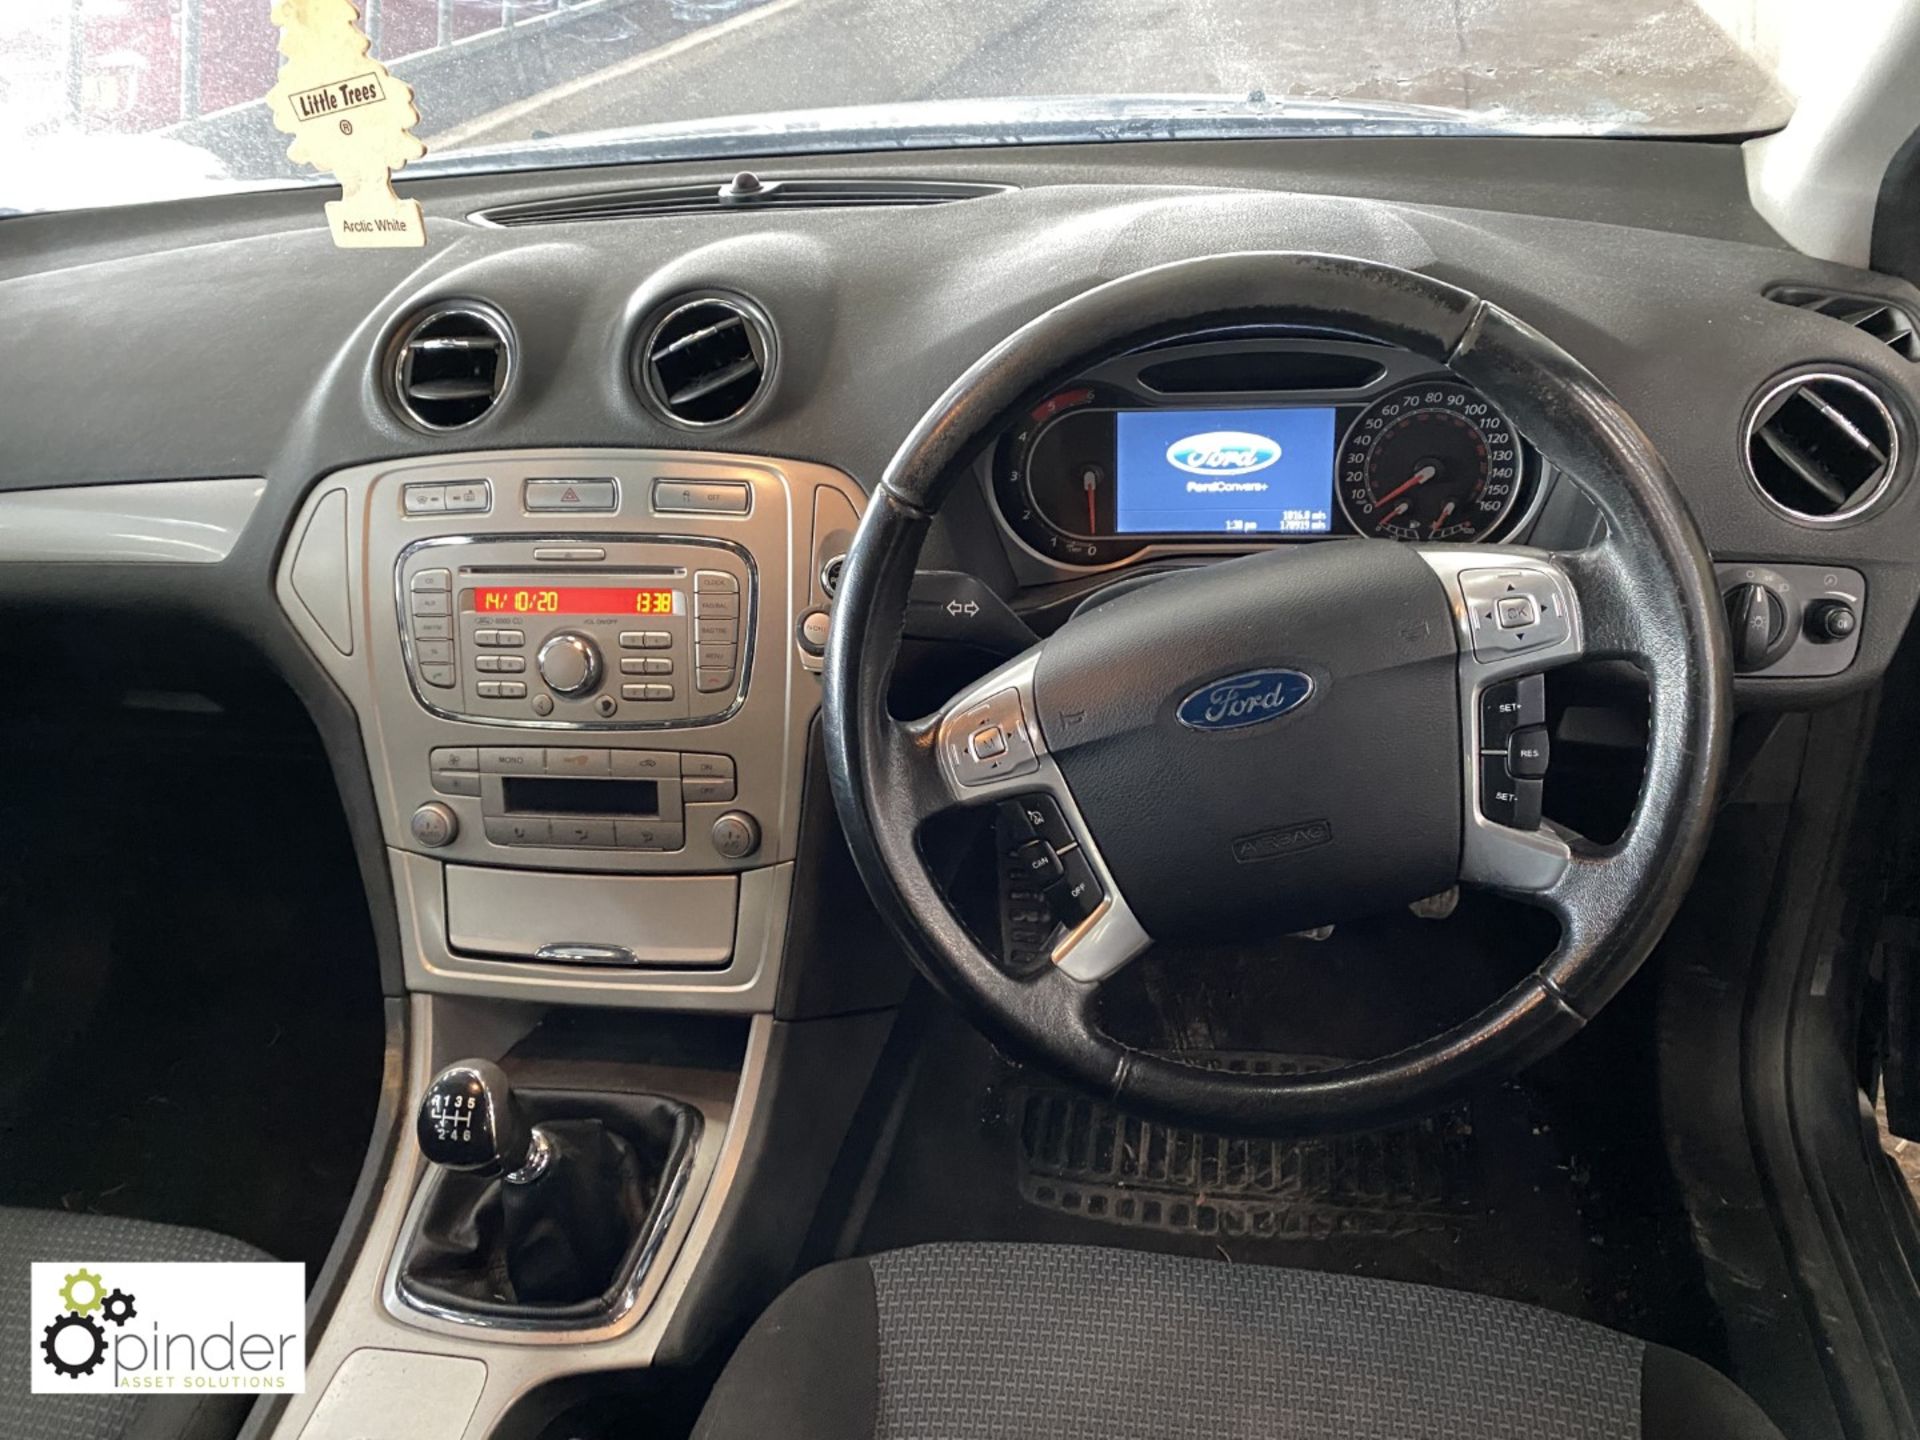 Ford Mondeo Zetec 2.0 TDCI 140 diesel 5-door Hatchback, registration: NL08 SPV, date of - Image 8 of 12